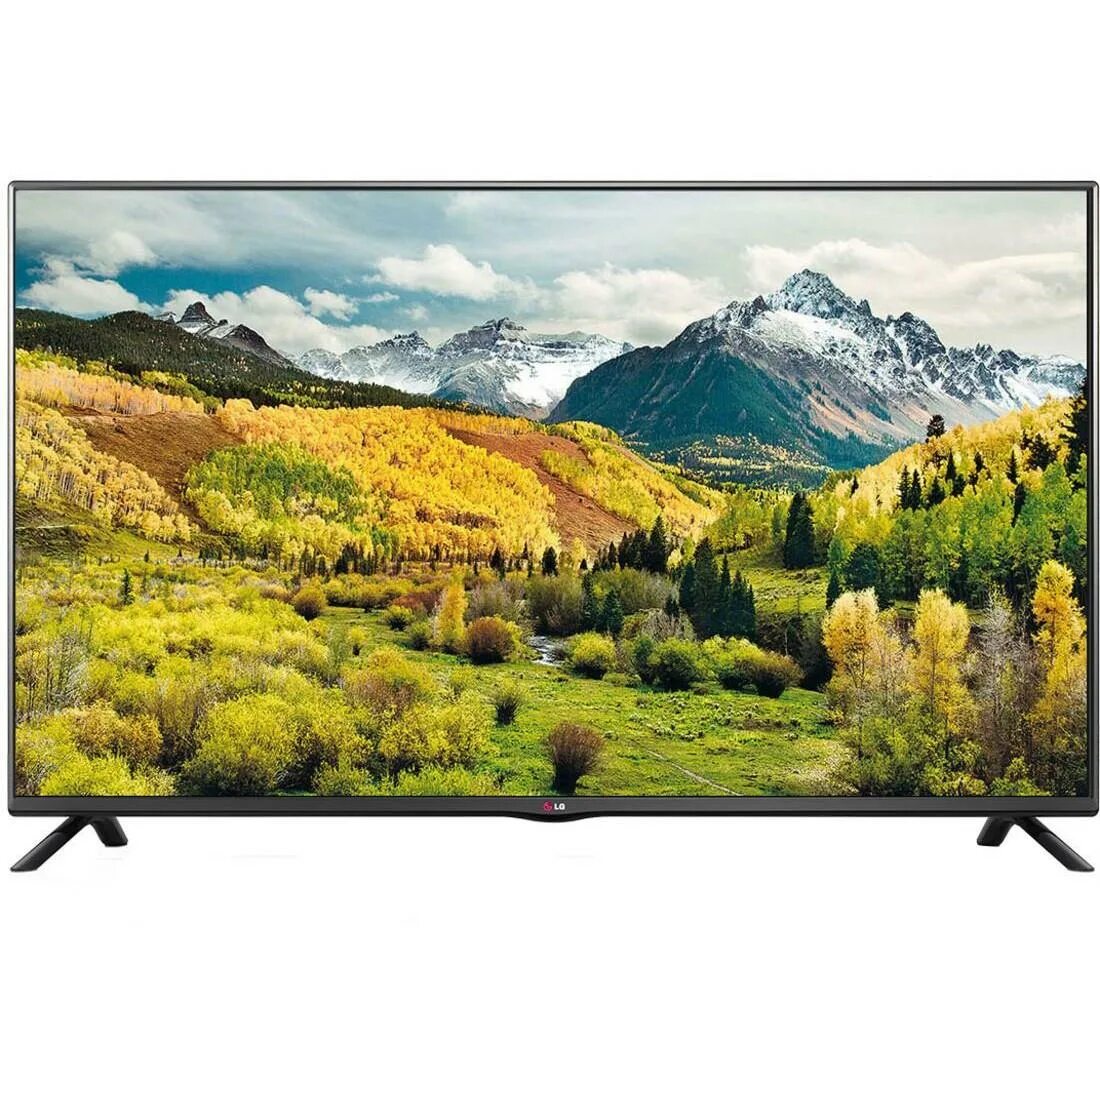 Lg32lh595. LG 32 inch led TV. LG 32lh595u. Телевизор LG 42lb. Телевизоры lg 2013 года